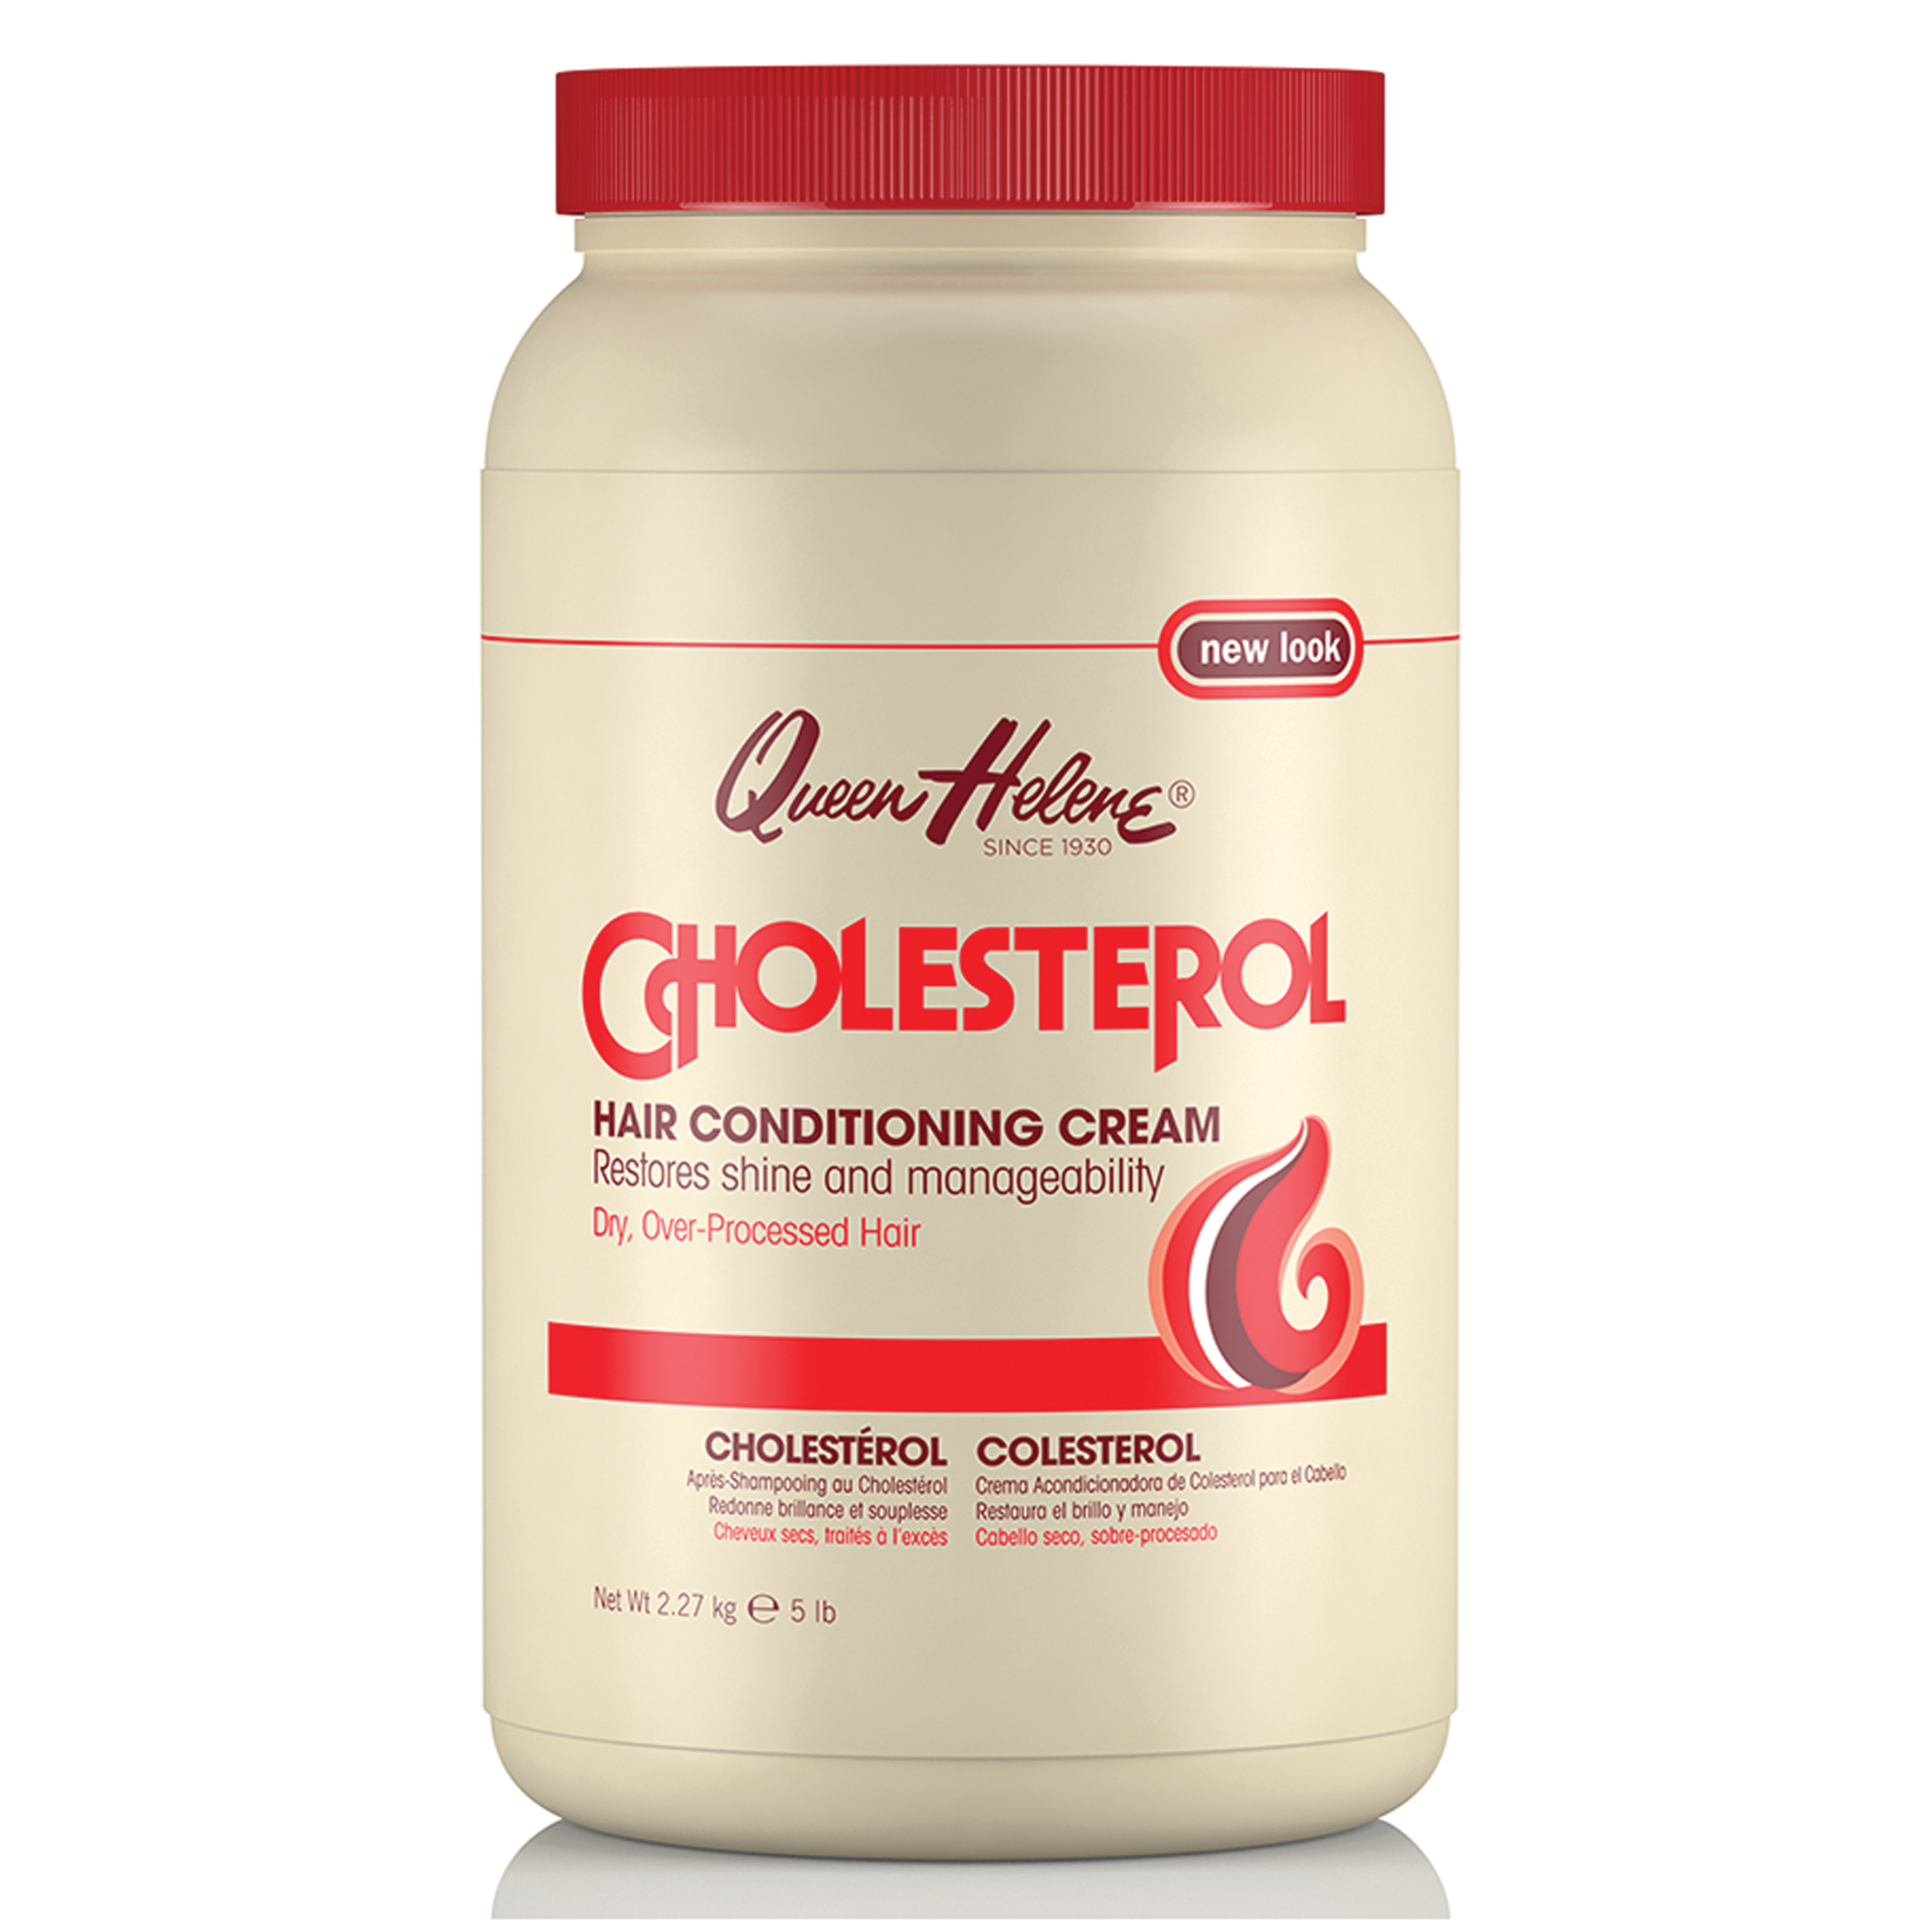 Cholesterol Hair Conditioning Cream - 5 Lb.